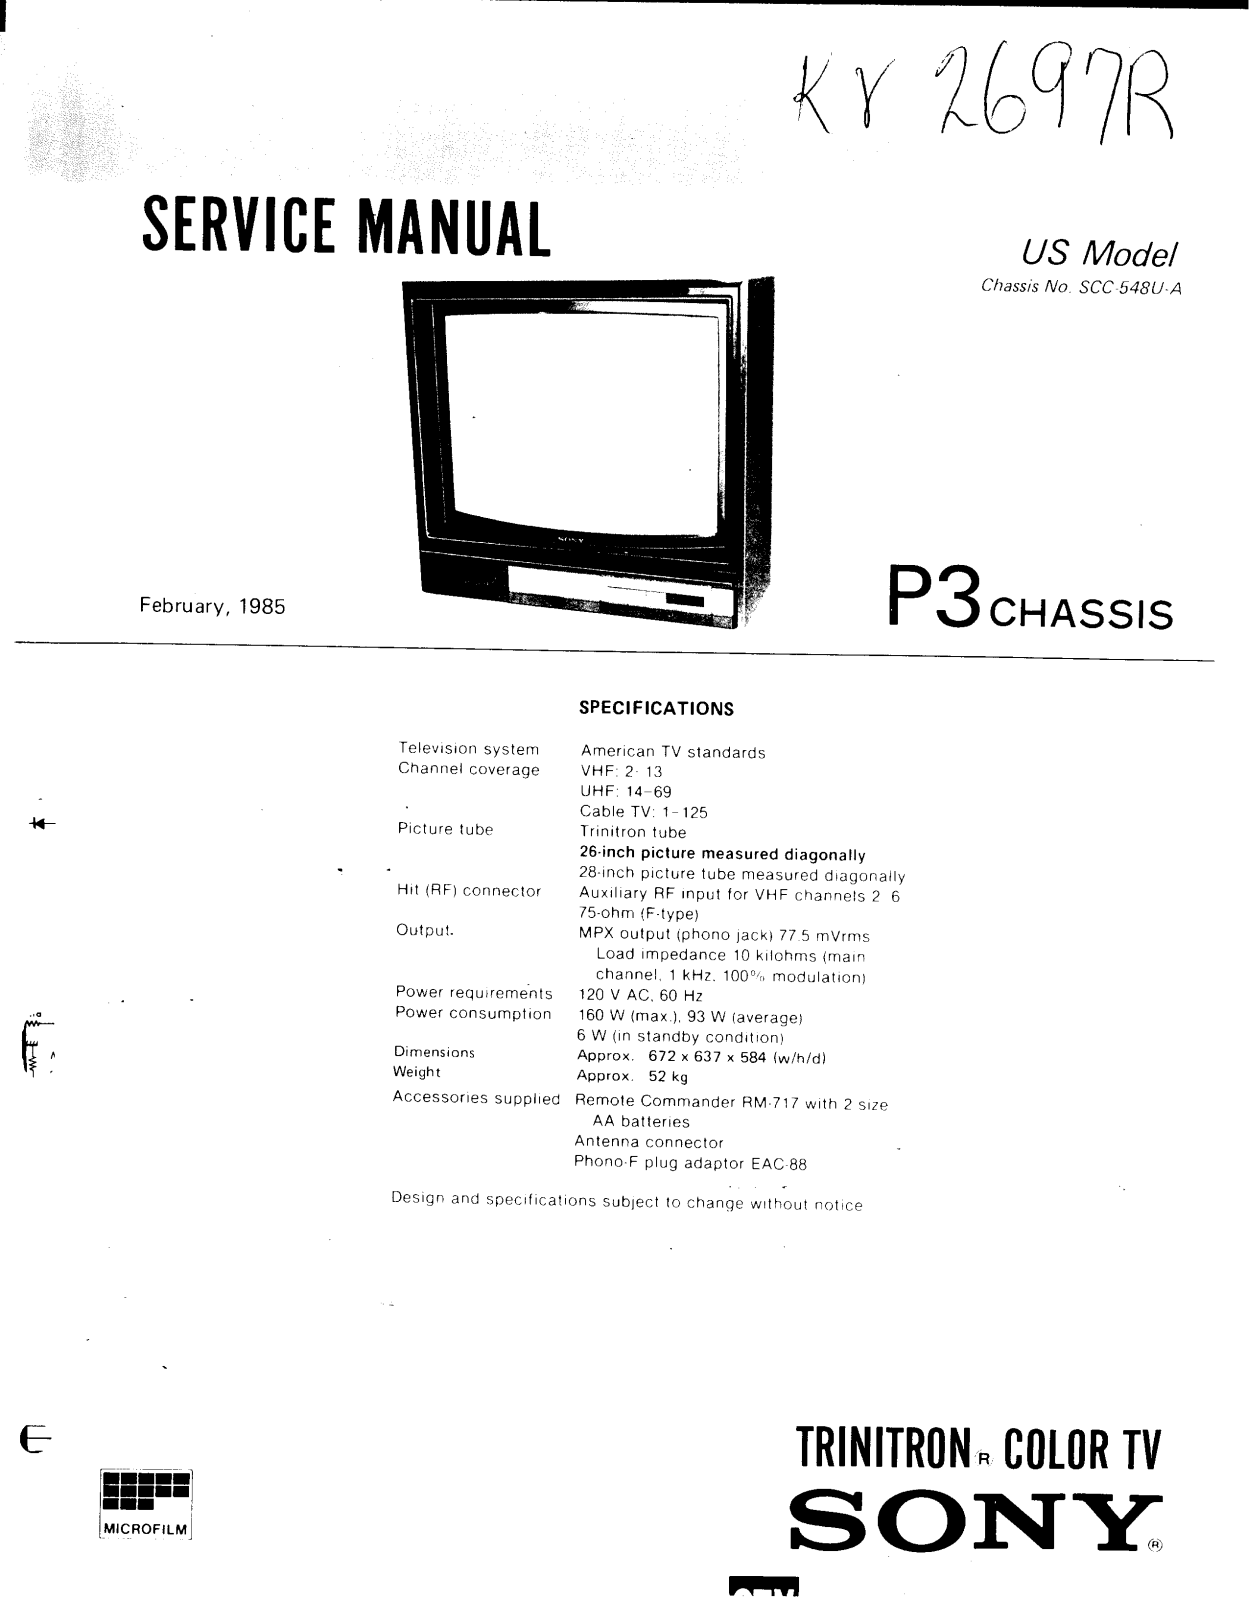 Sony KV-2697R Service Manual